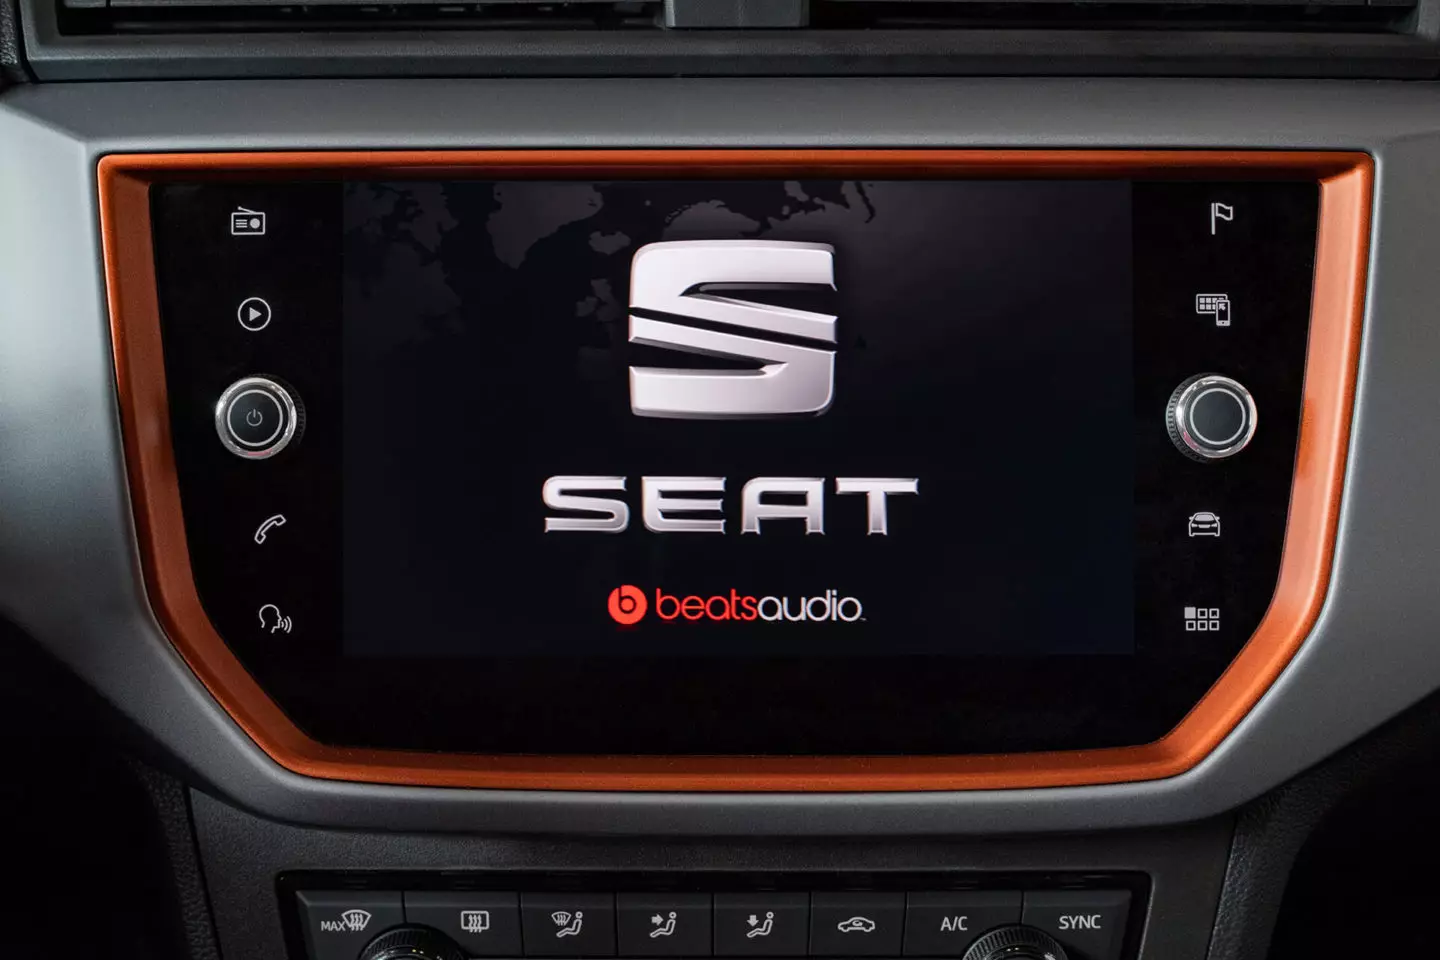 SEAT Ibiza 和 Arona Beats Audio